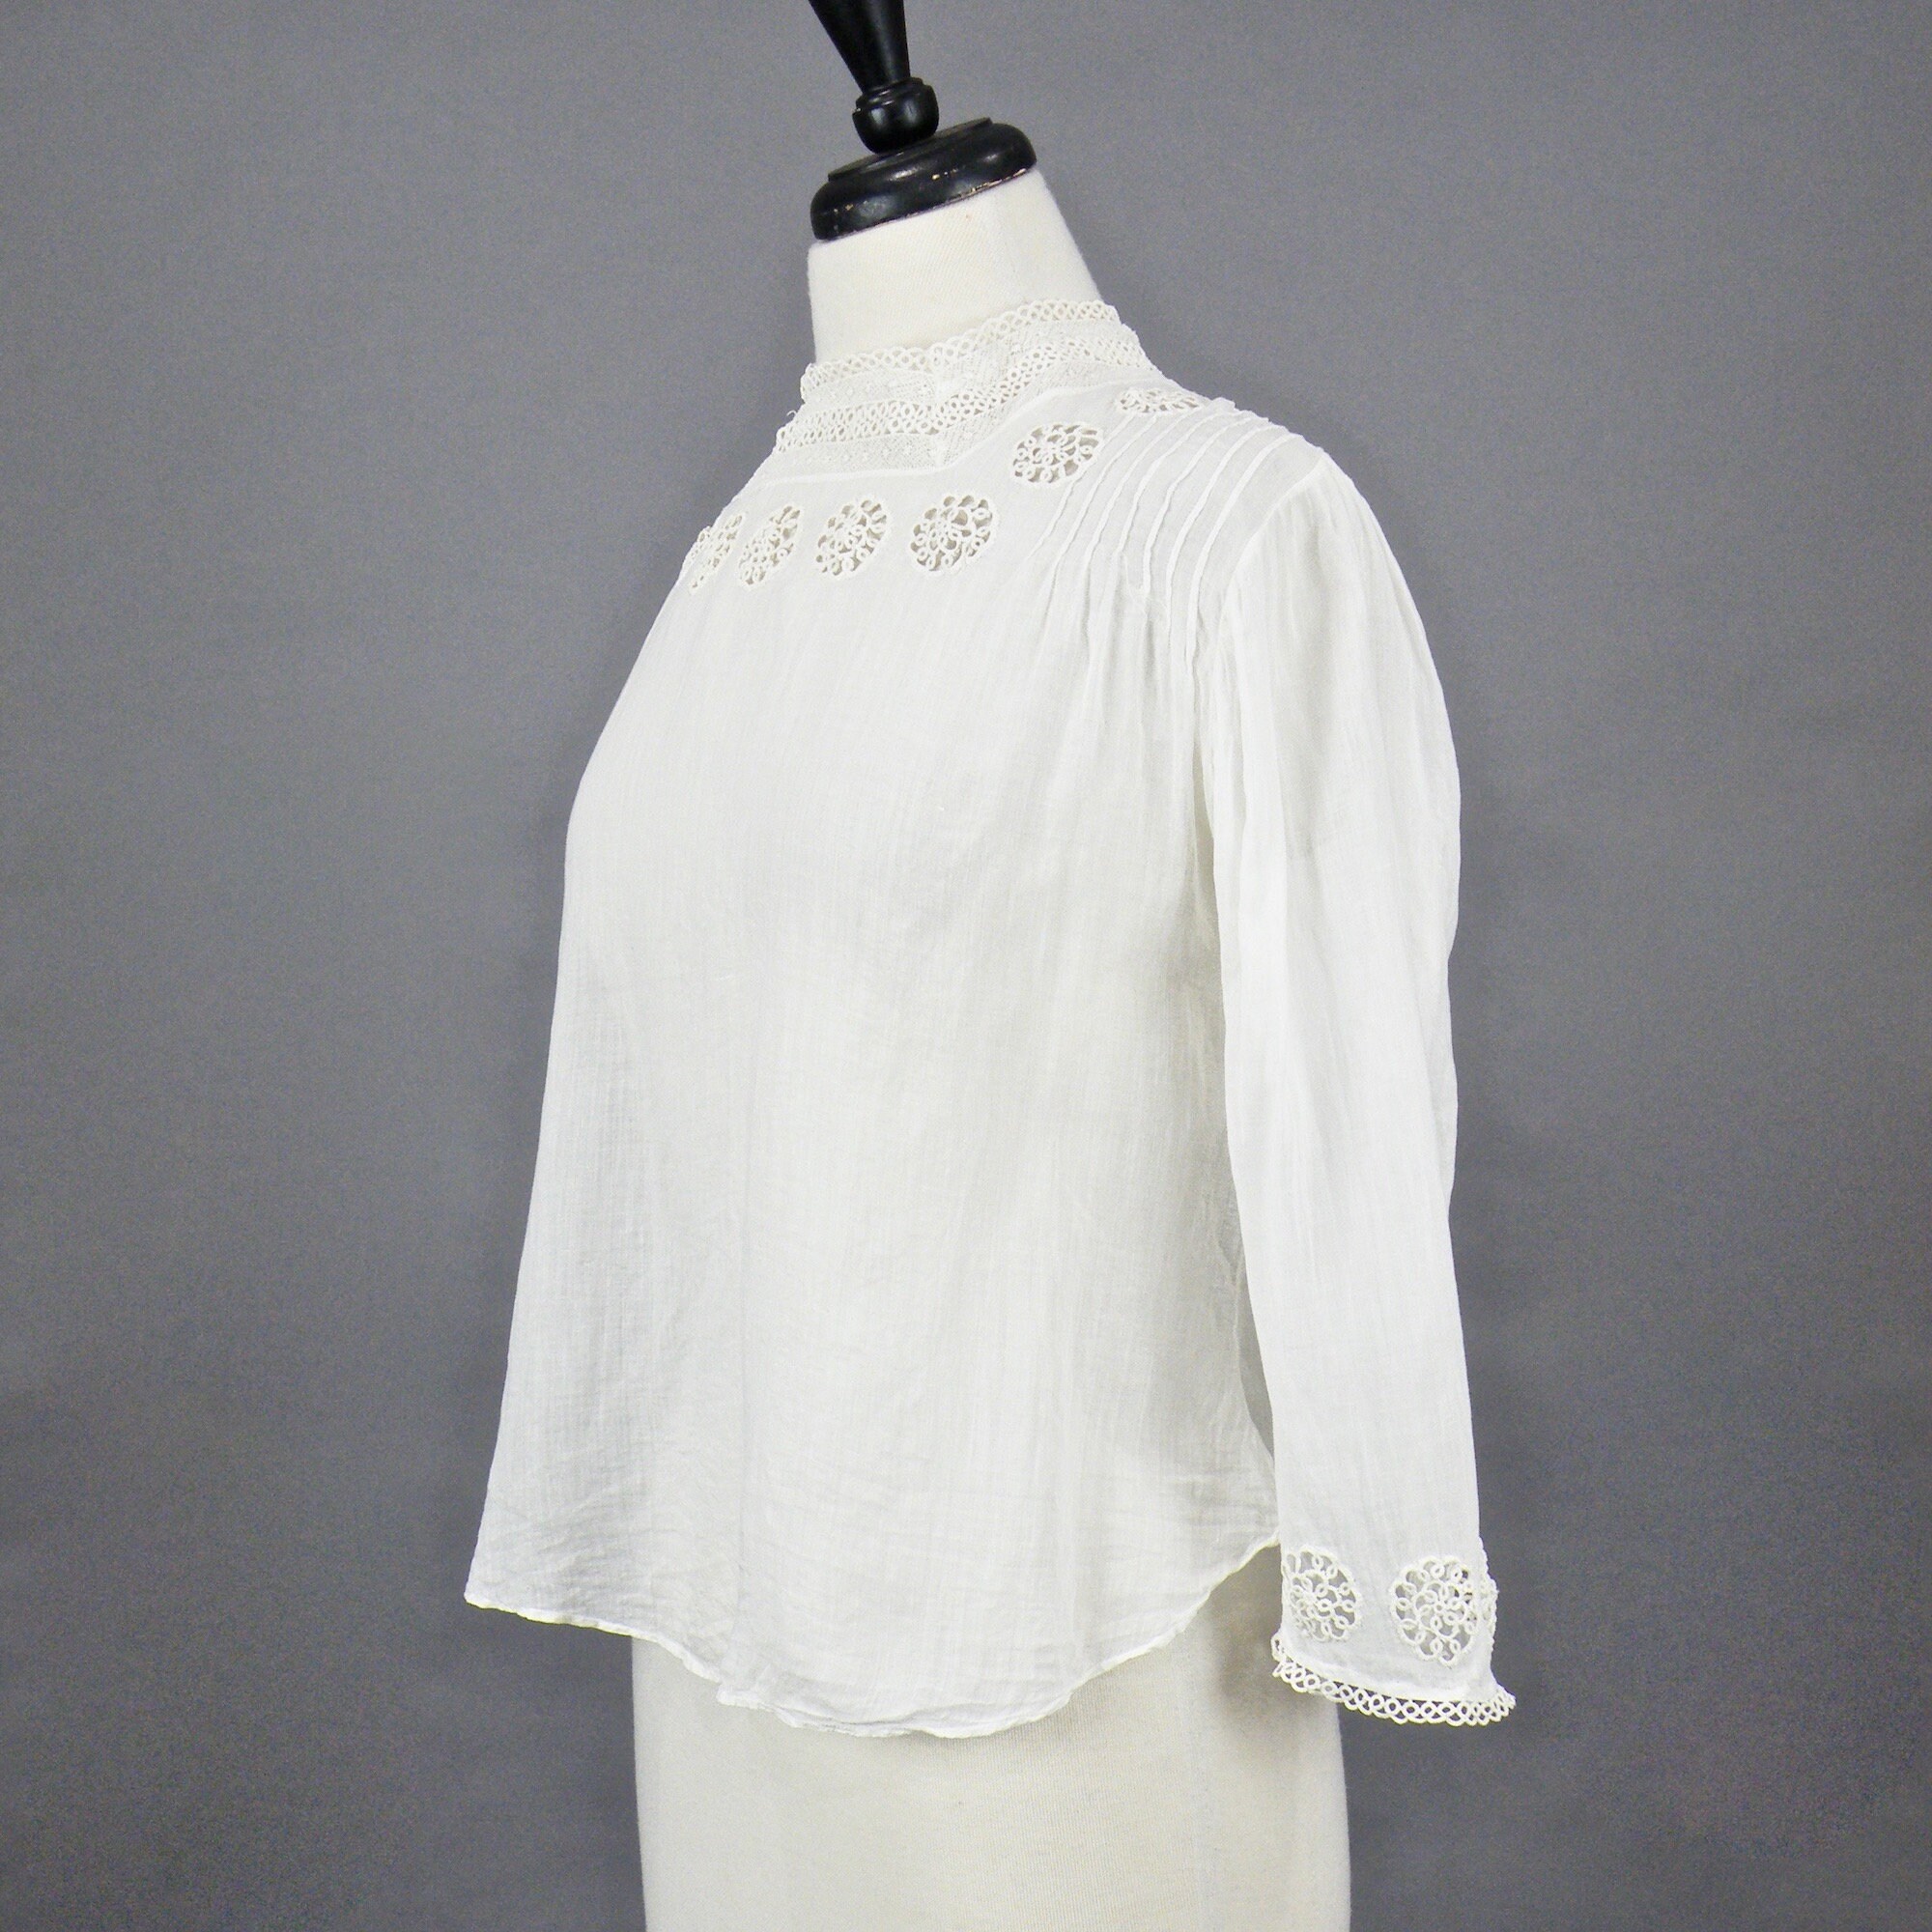 Antique 1910s White Cotton Tatted Lace Edwardian Blouse, Medium